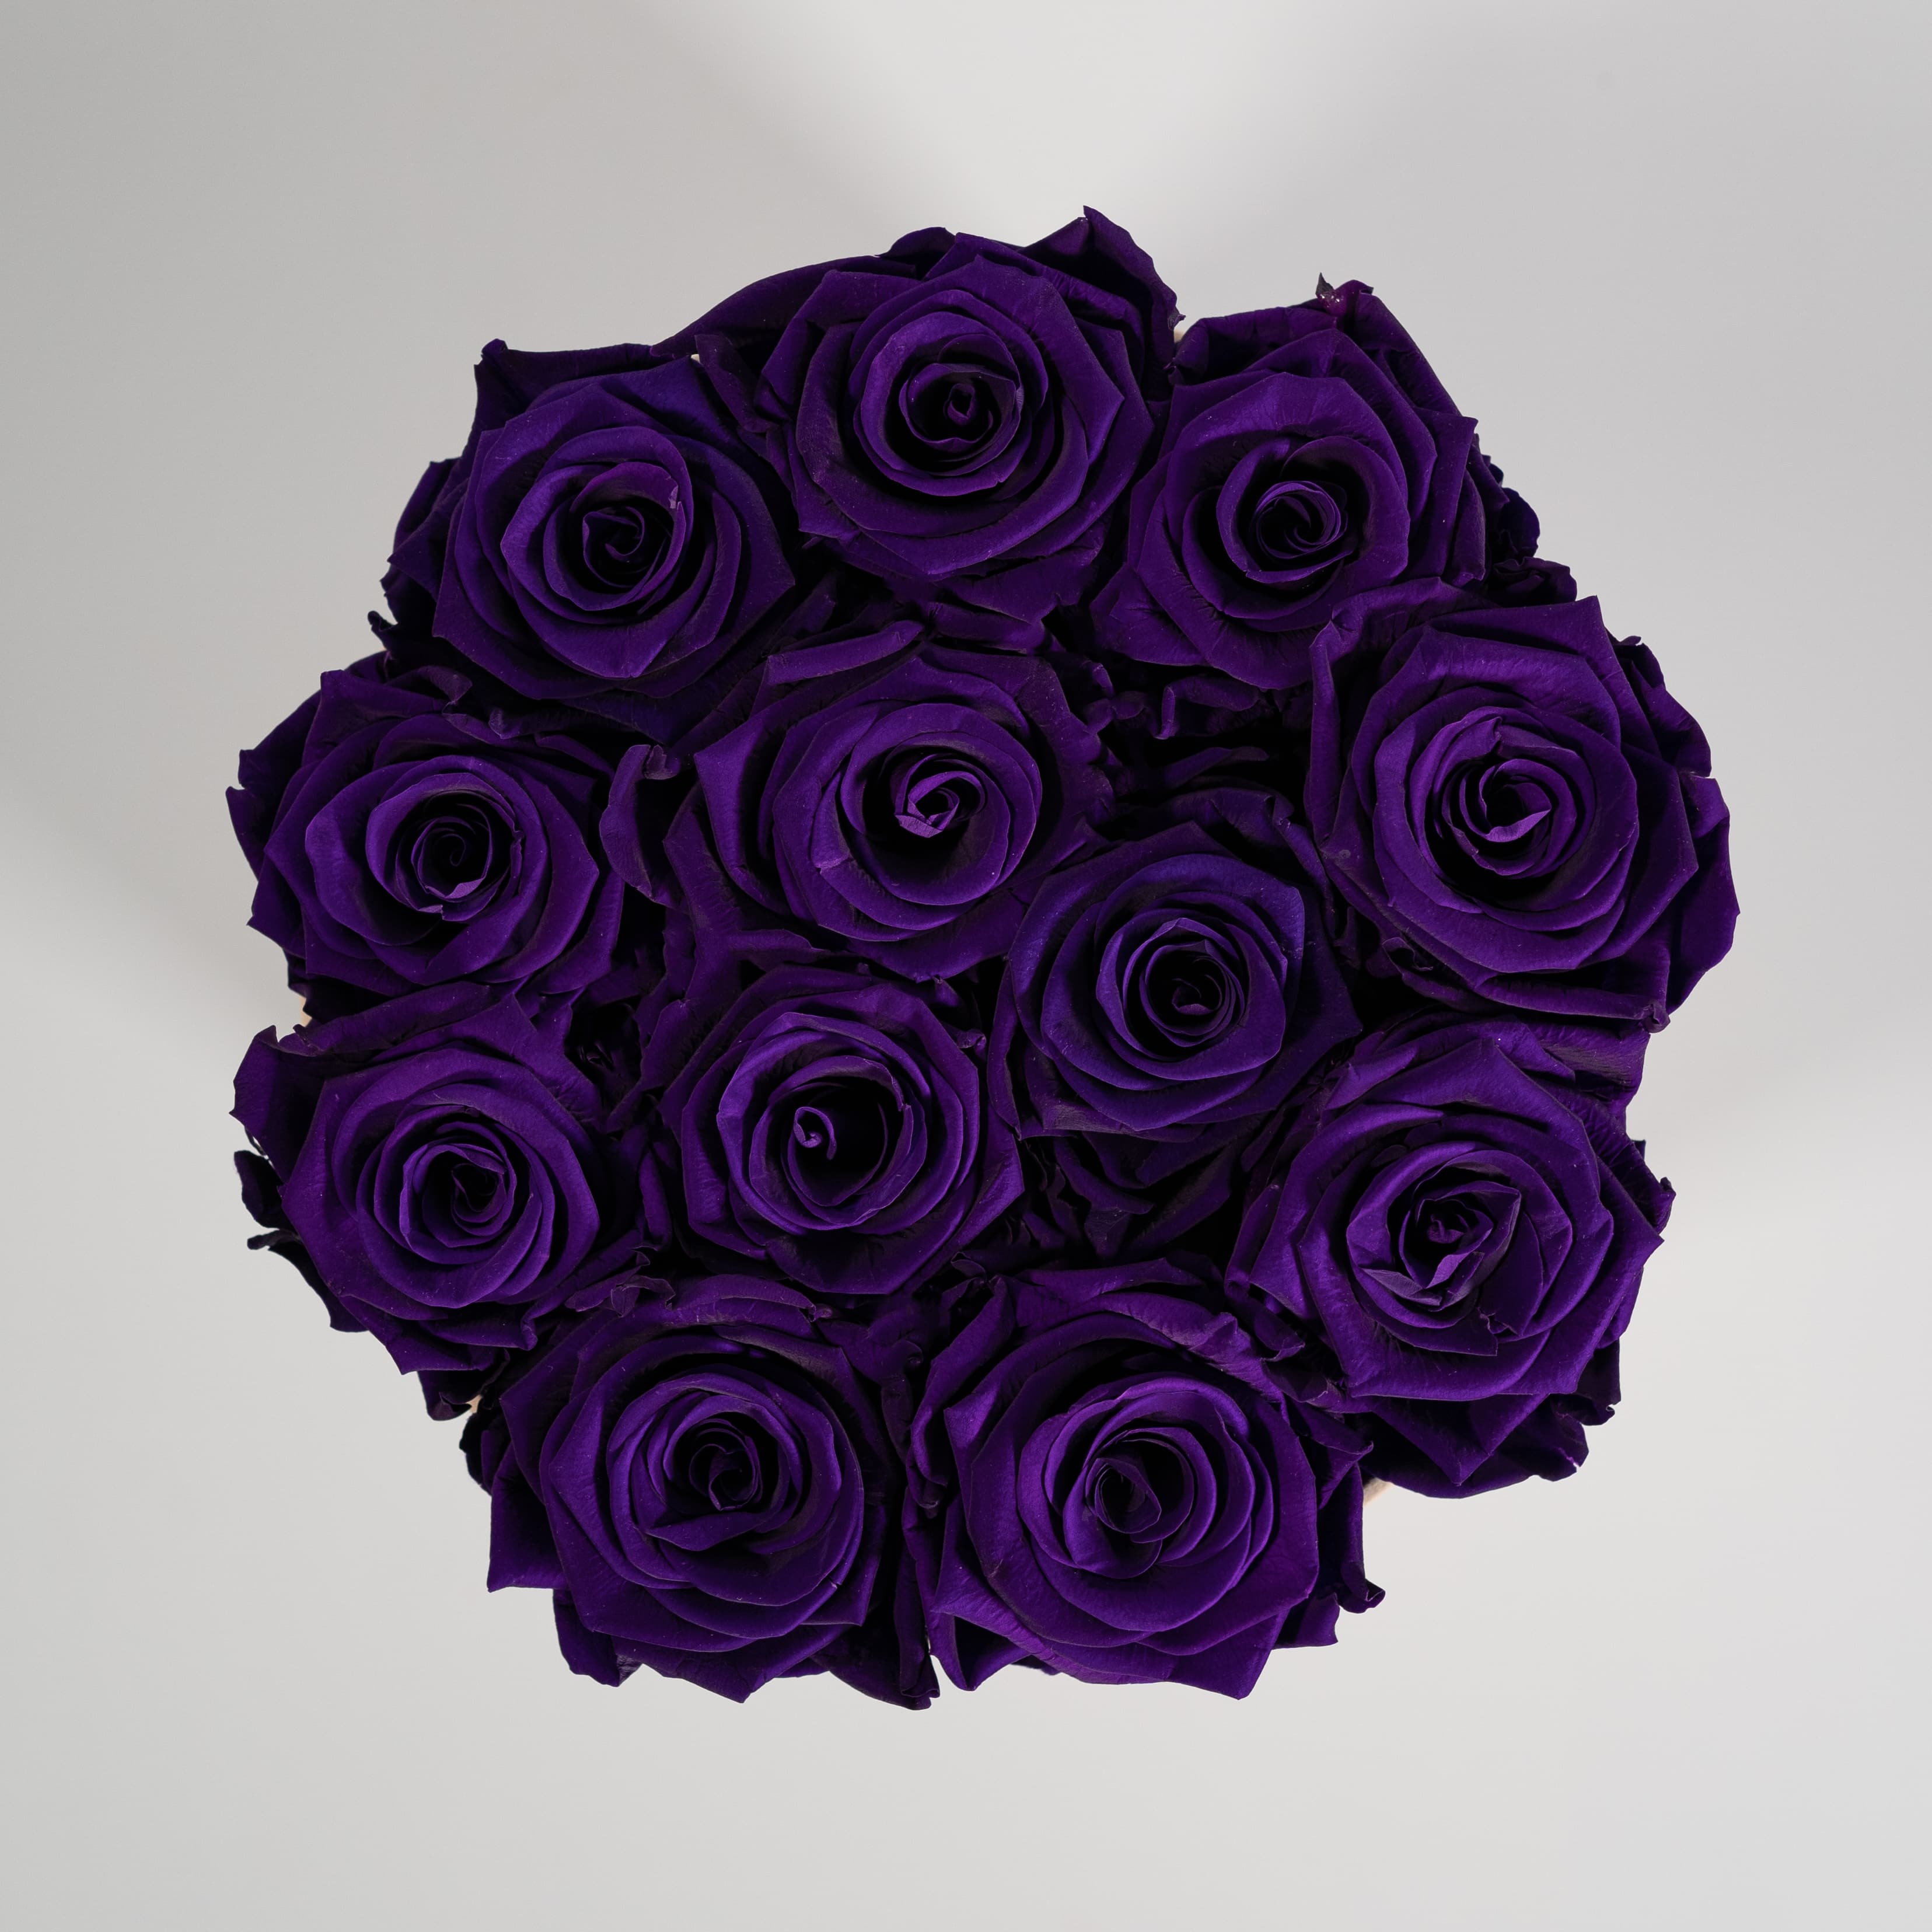 Artful dark purple roses expressing wisdom, creativity, and luxury. 